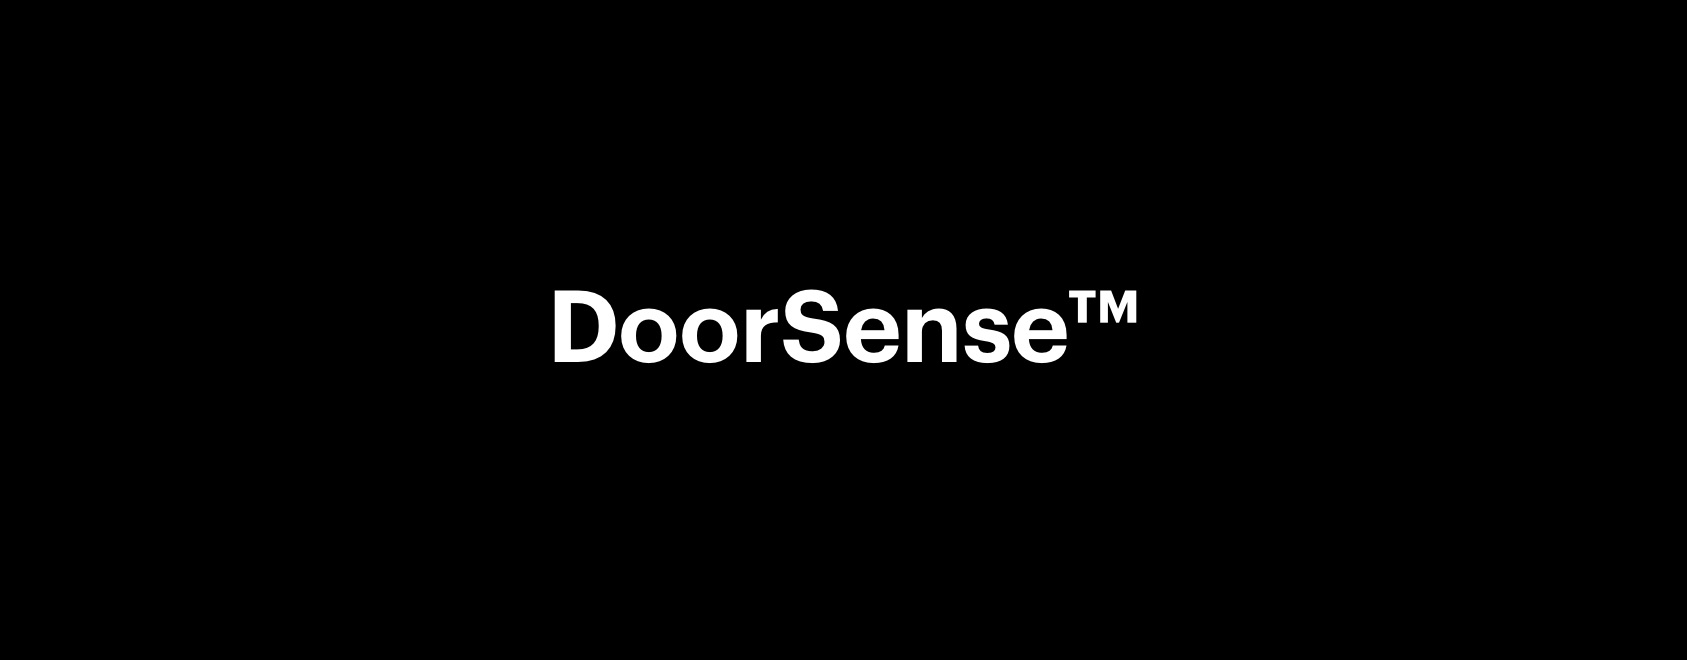 DoorSense